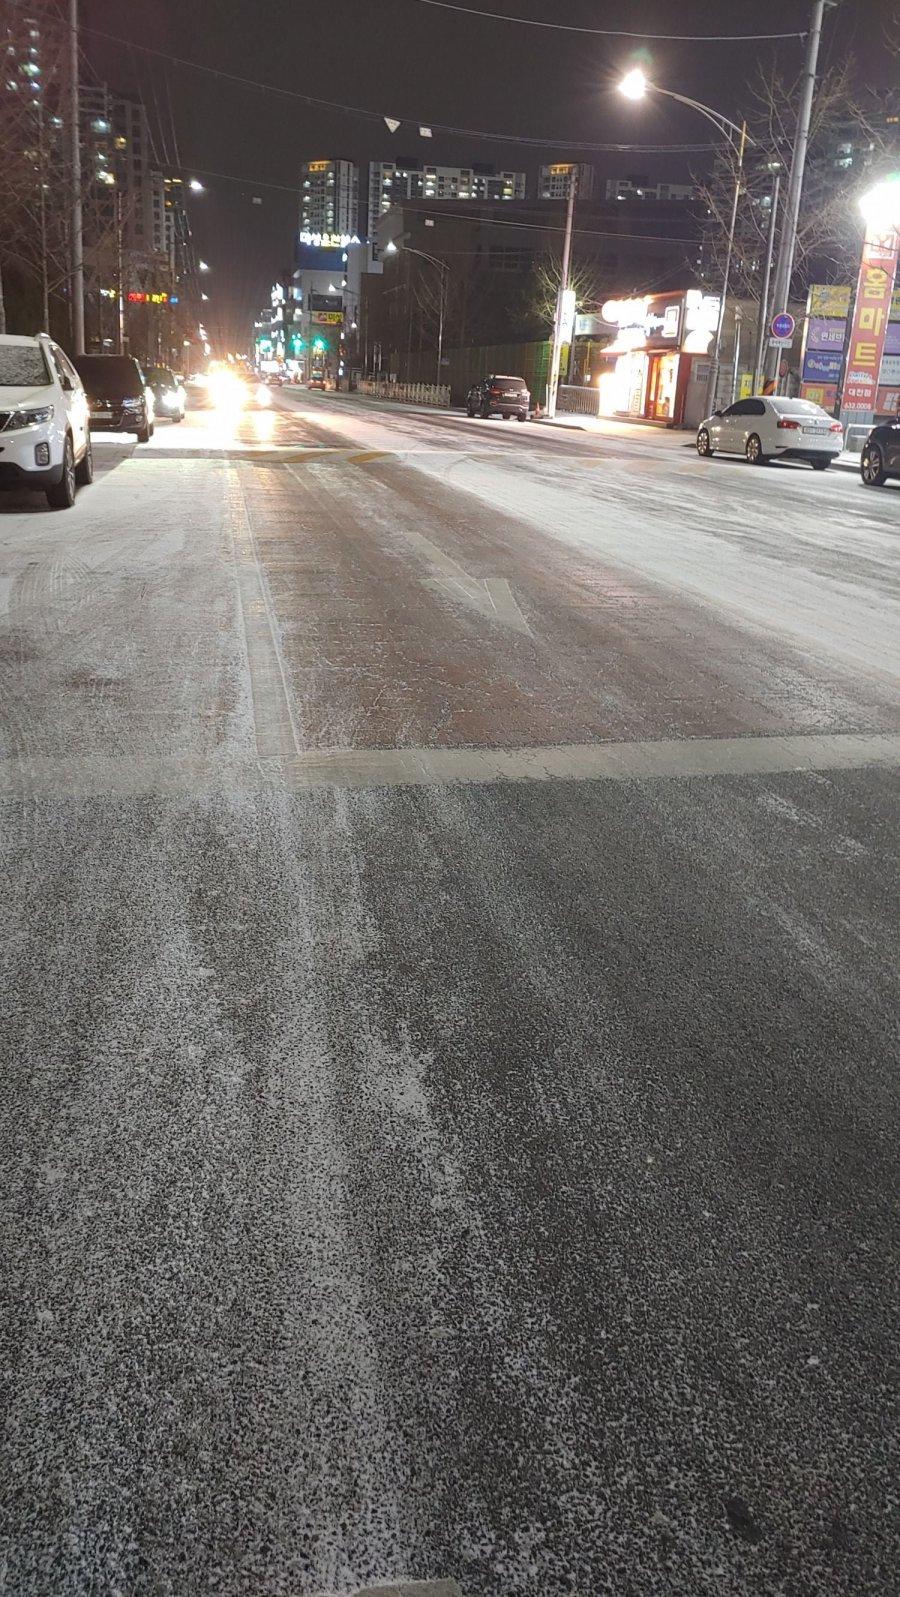 Tomorrow morning, it will be an icy road in Daegu.